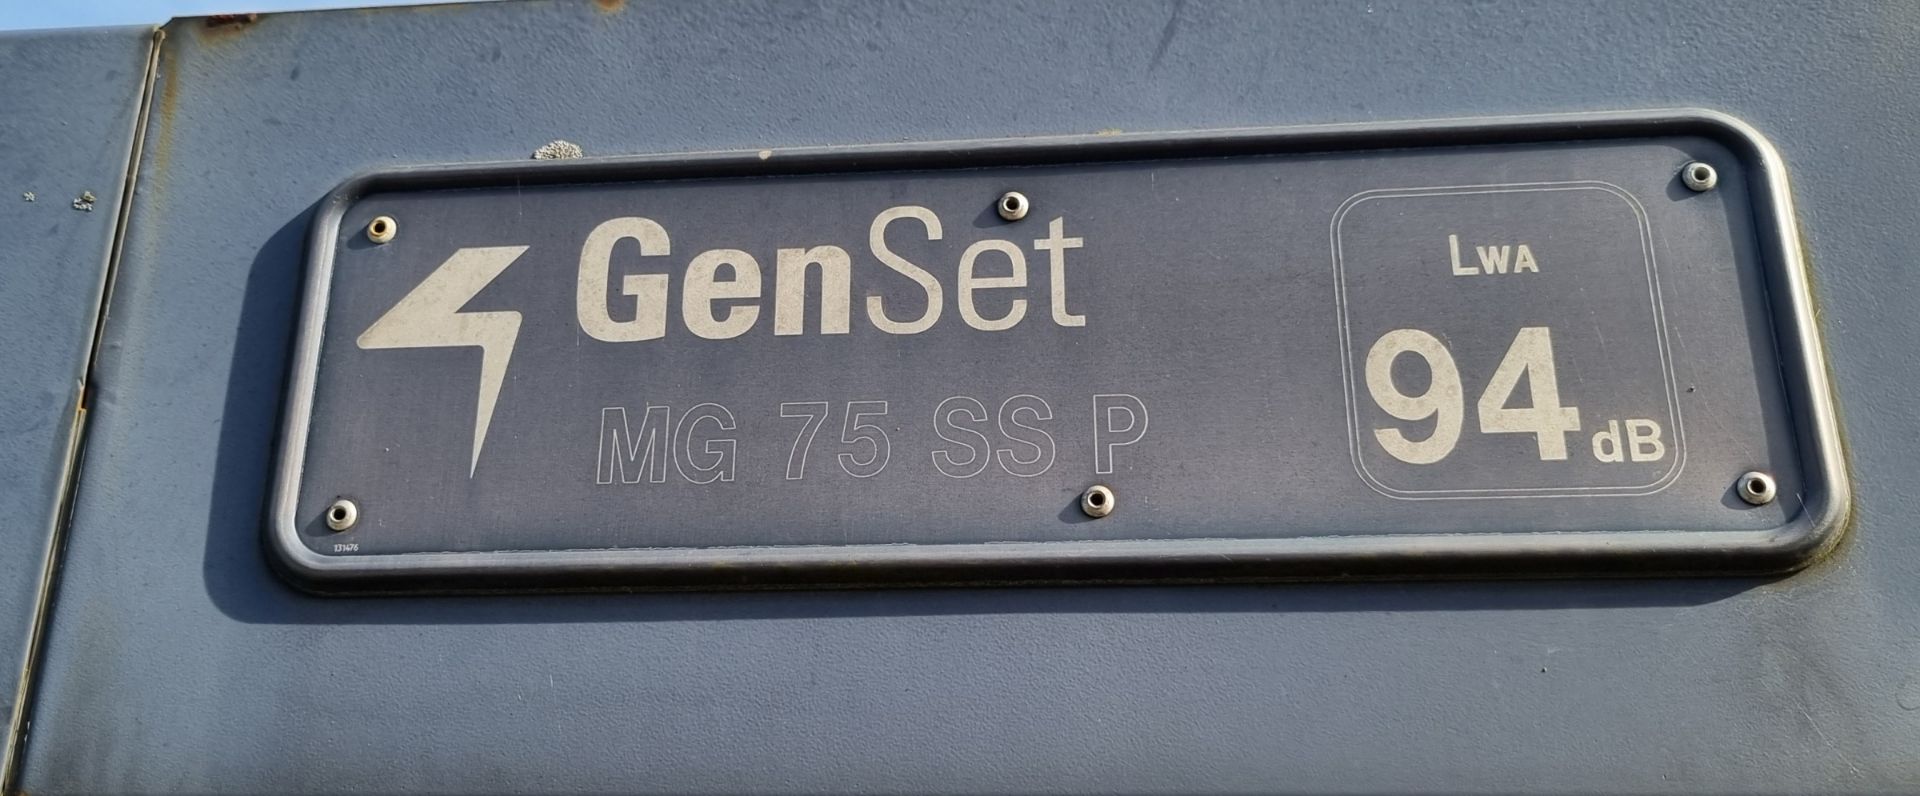 BM20200 roller brake tester with GenSat MG-75-SSP generator on GRP flat track with bale bar - Image 44 of 49